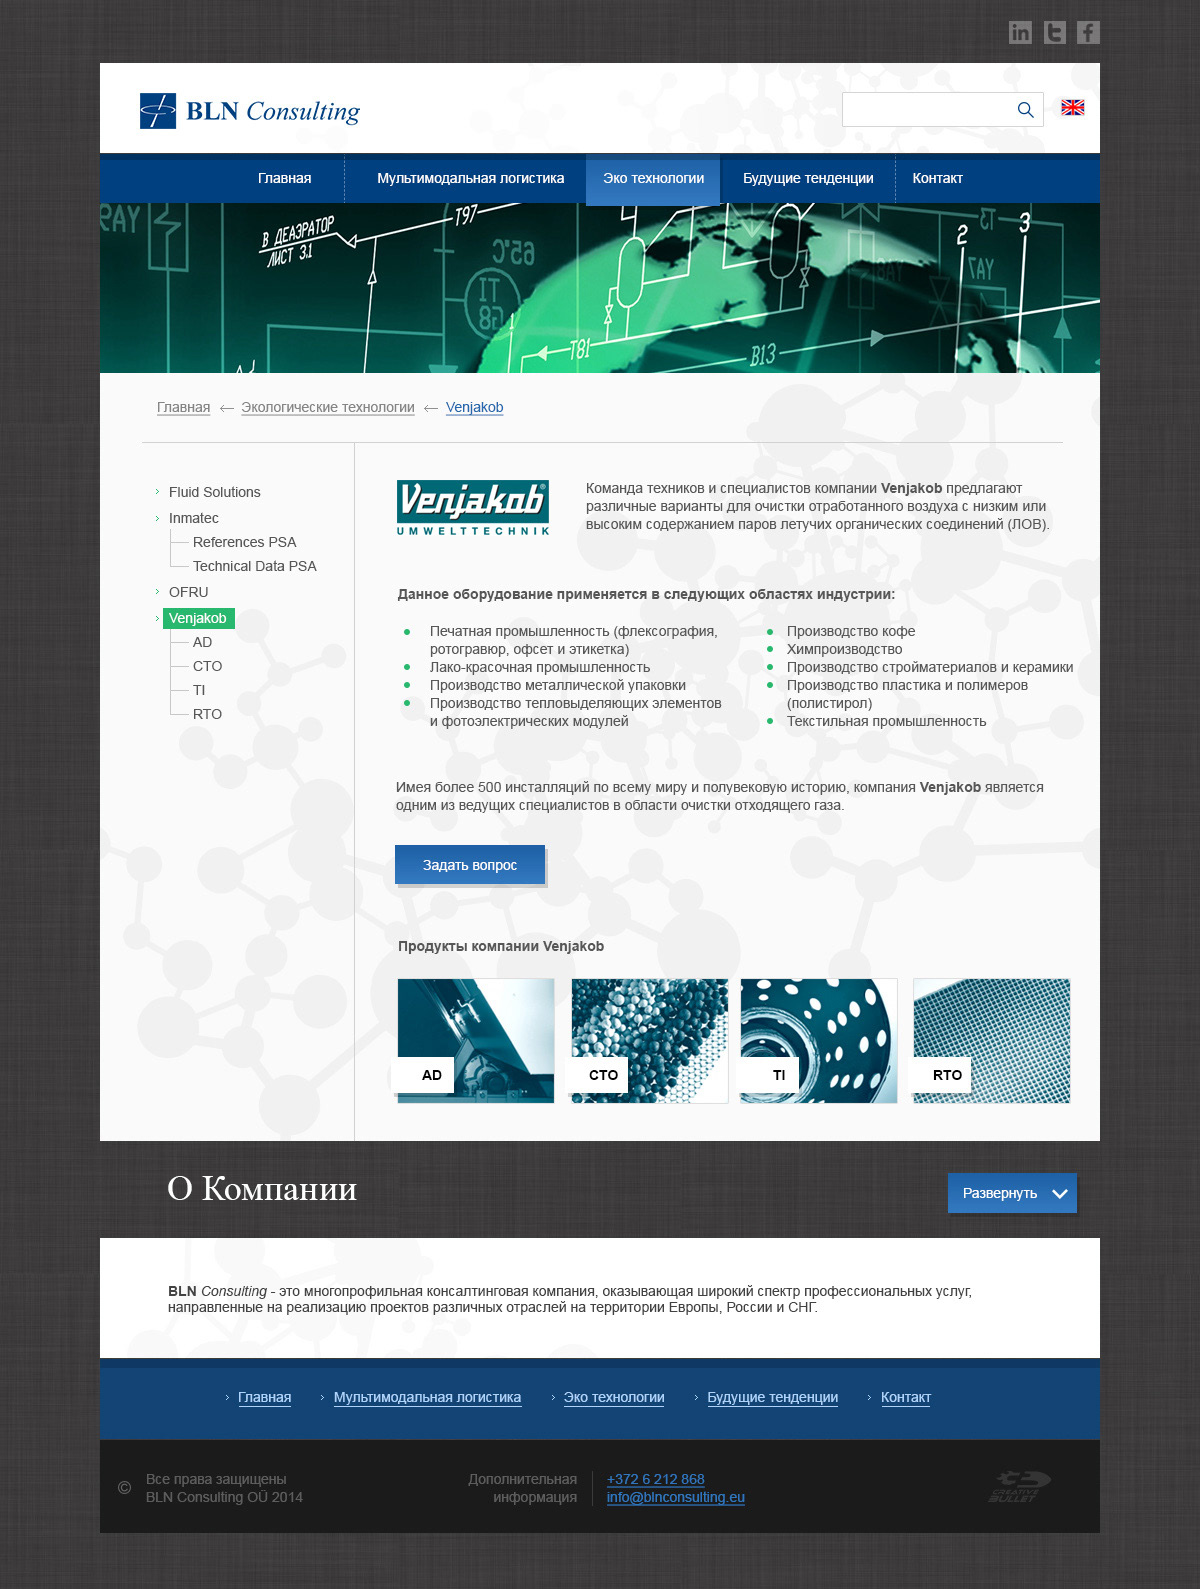 Pafiss web-design Web design pavel fissunov pavel UI